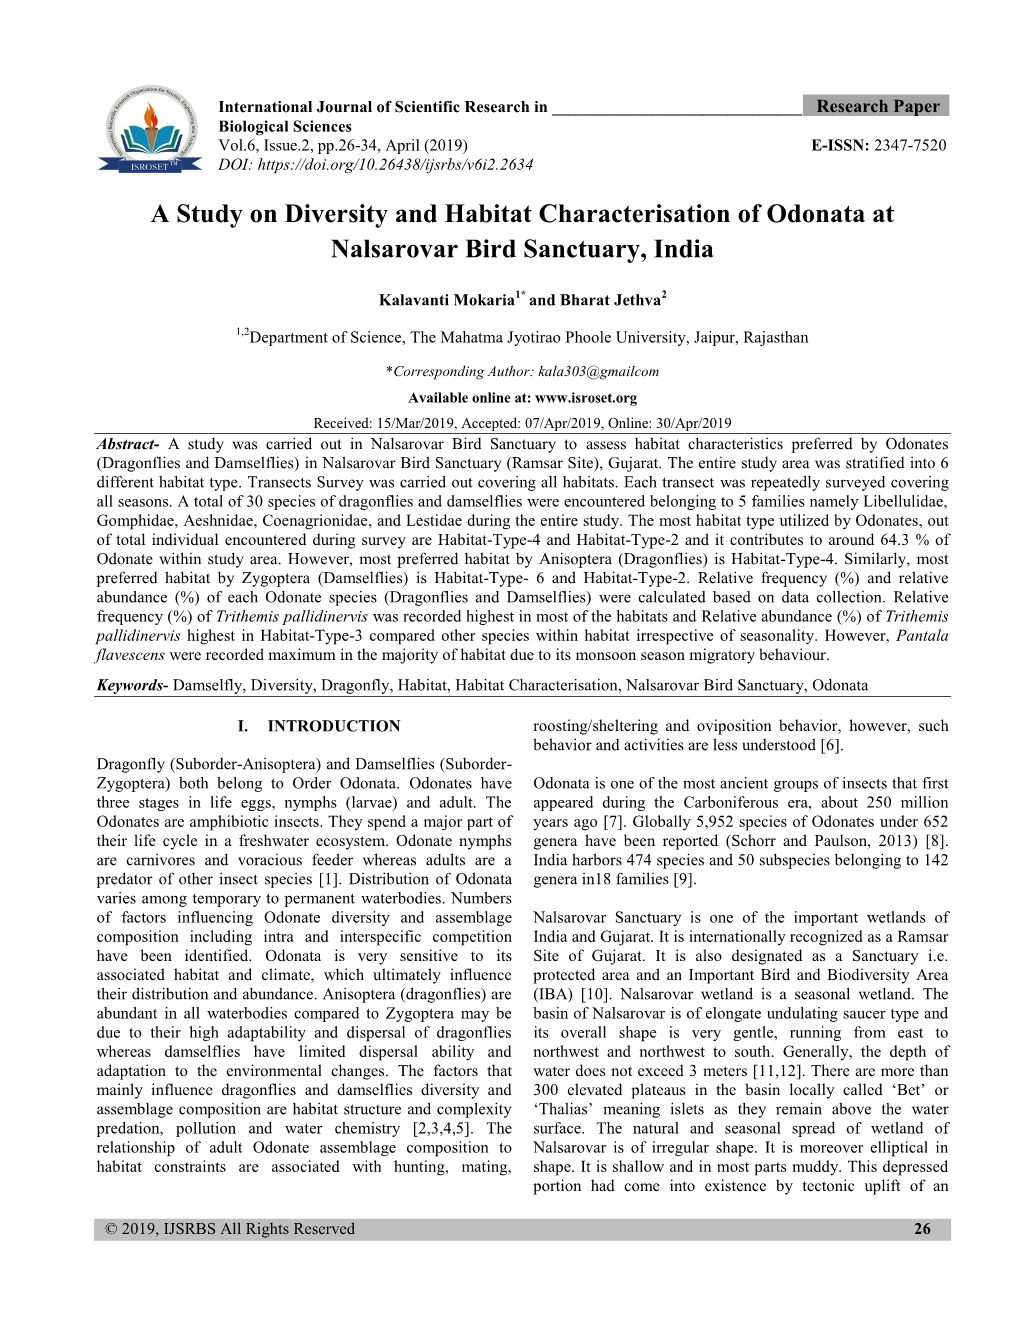 A Study on Diversity and Habitat Characterisation of Odonata at Nalsarovar Bird Sanctuary, India